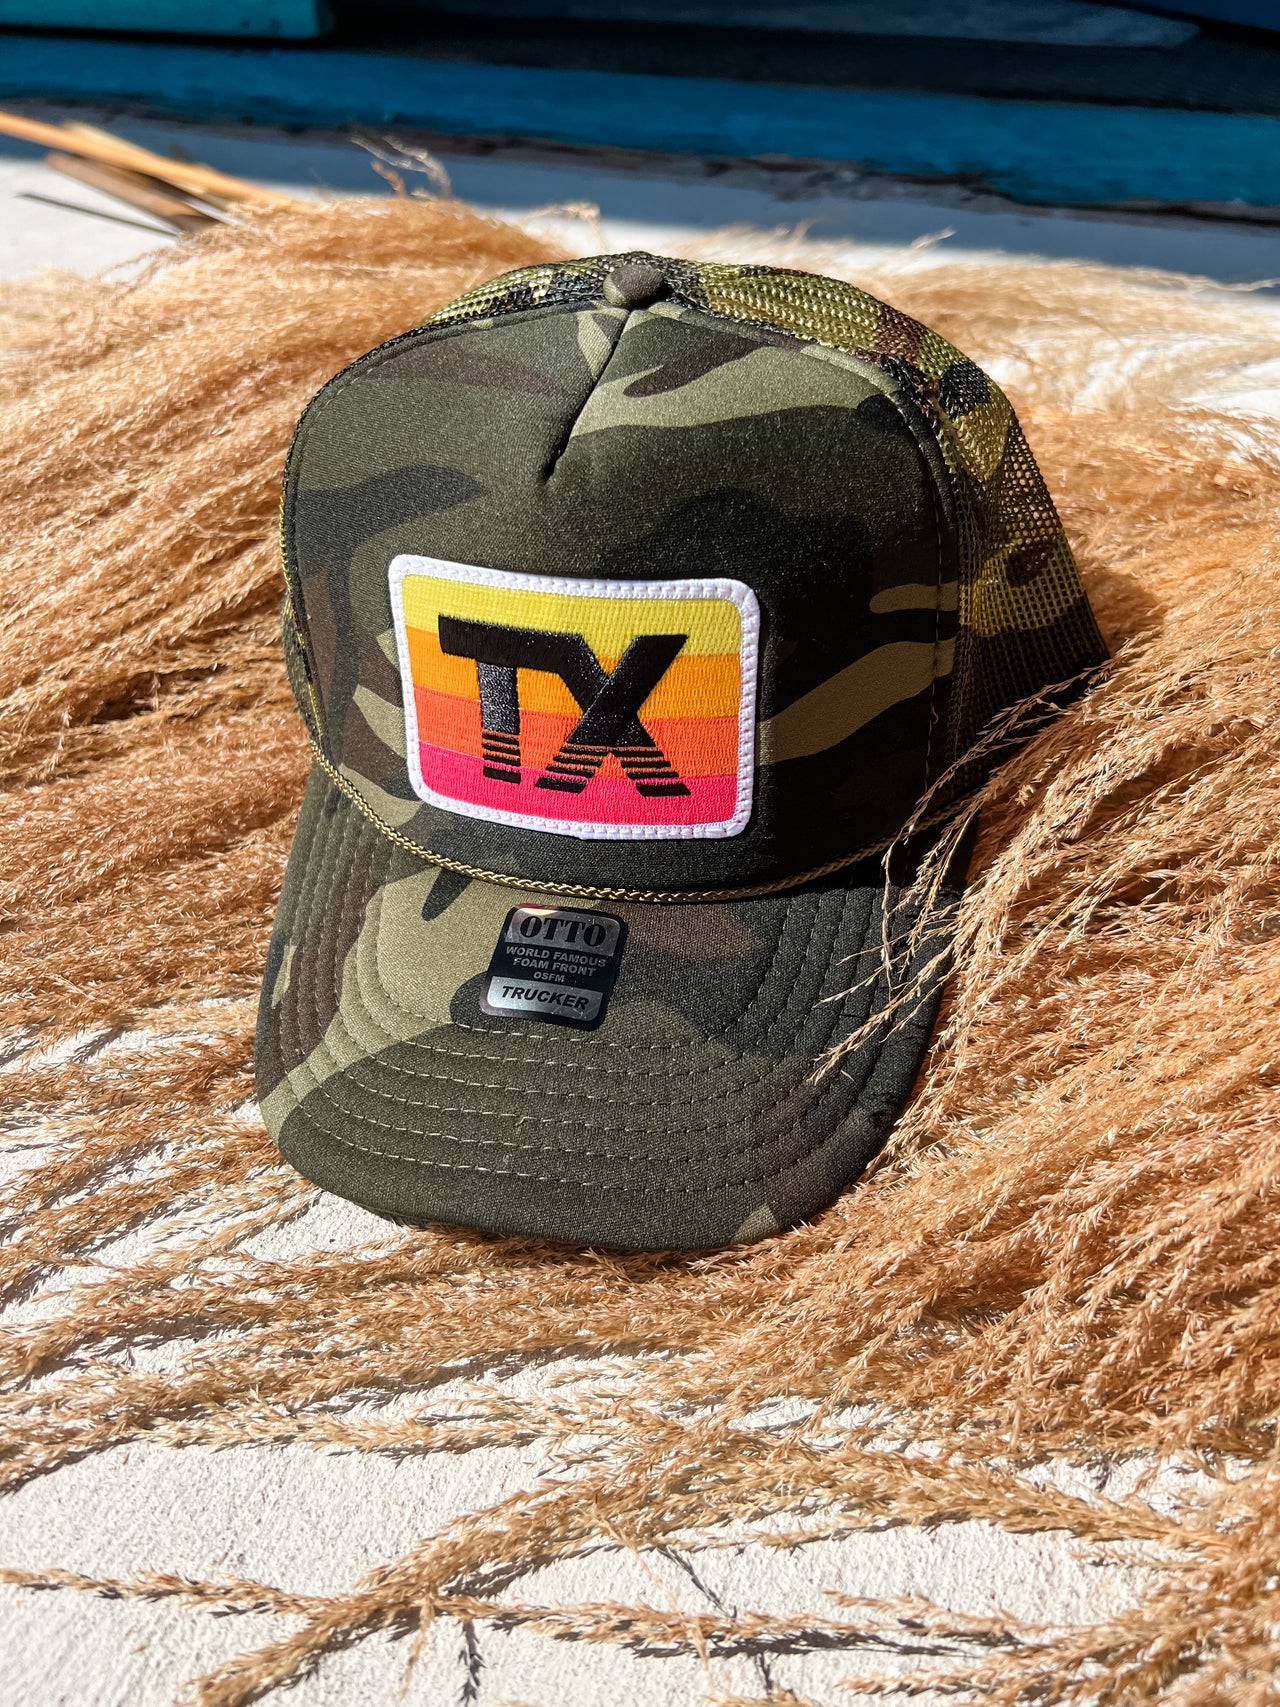 TX Horizon Patch Foam Hat